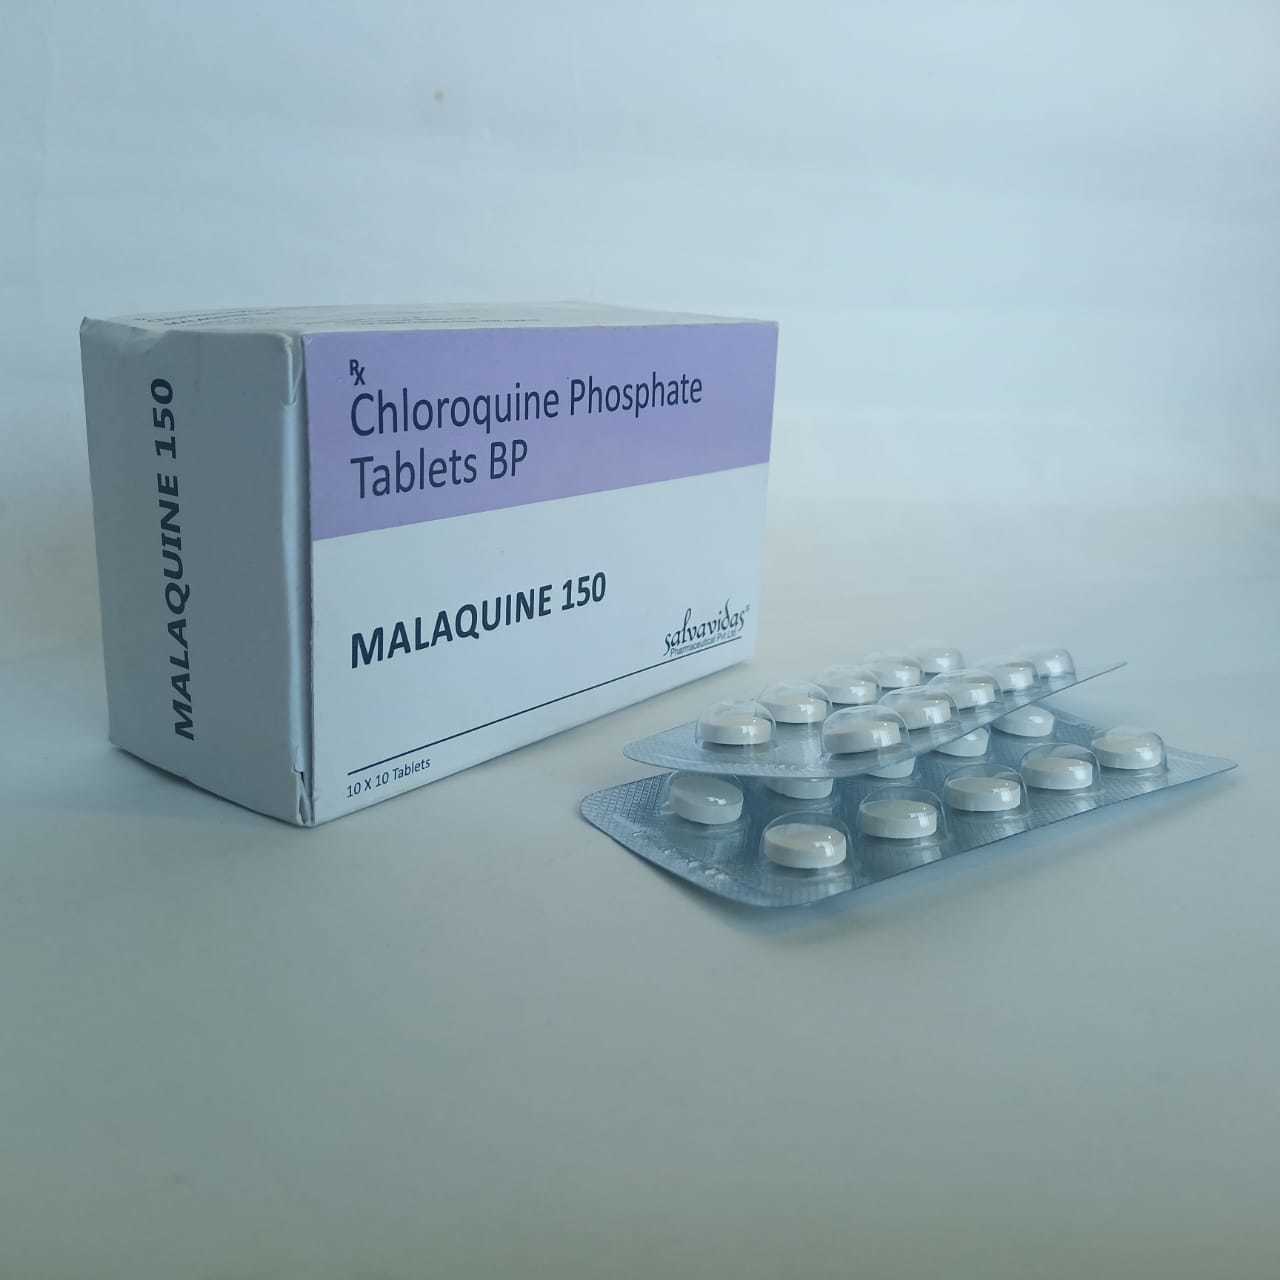 MALAQUINE 150 Tablets